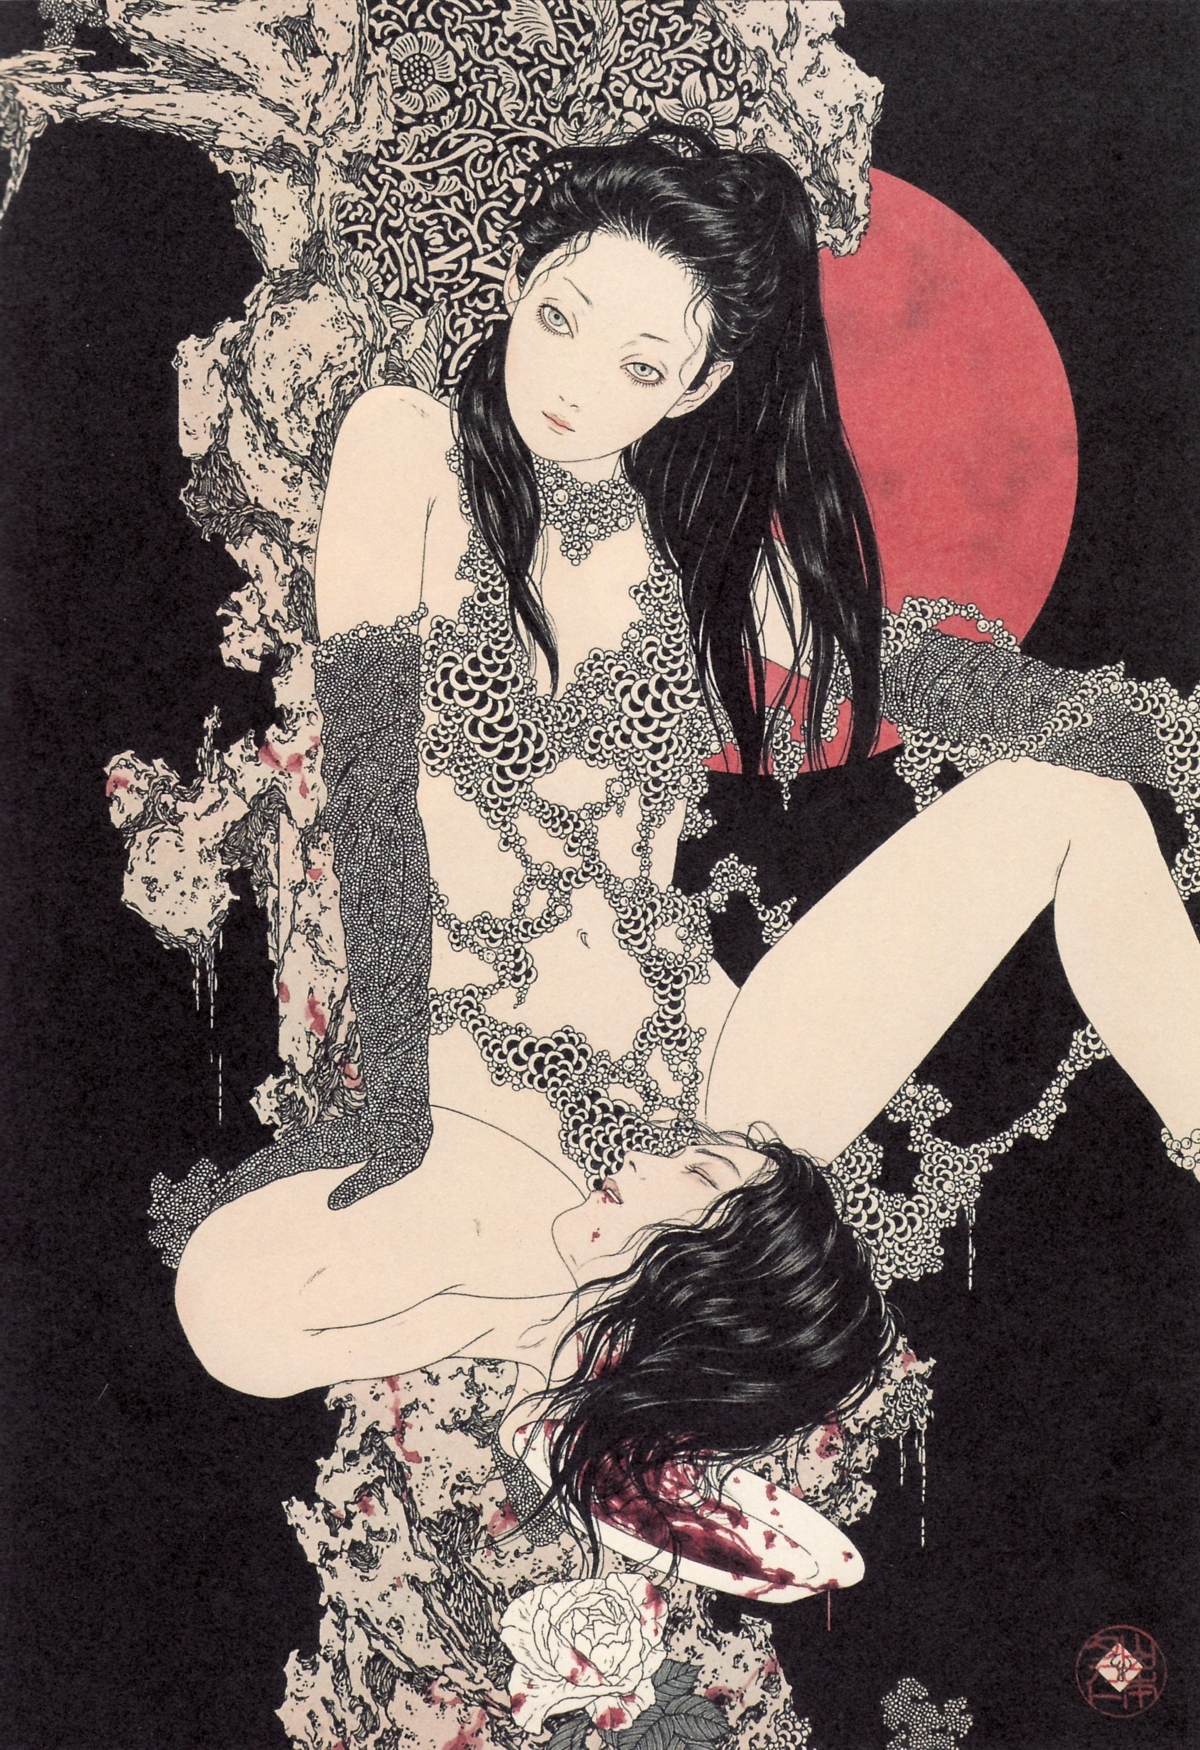 takato-yamamoto-ilustração-sexo-erotismo-sadomasoquismo-bondage-dionisio-arte-14